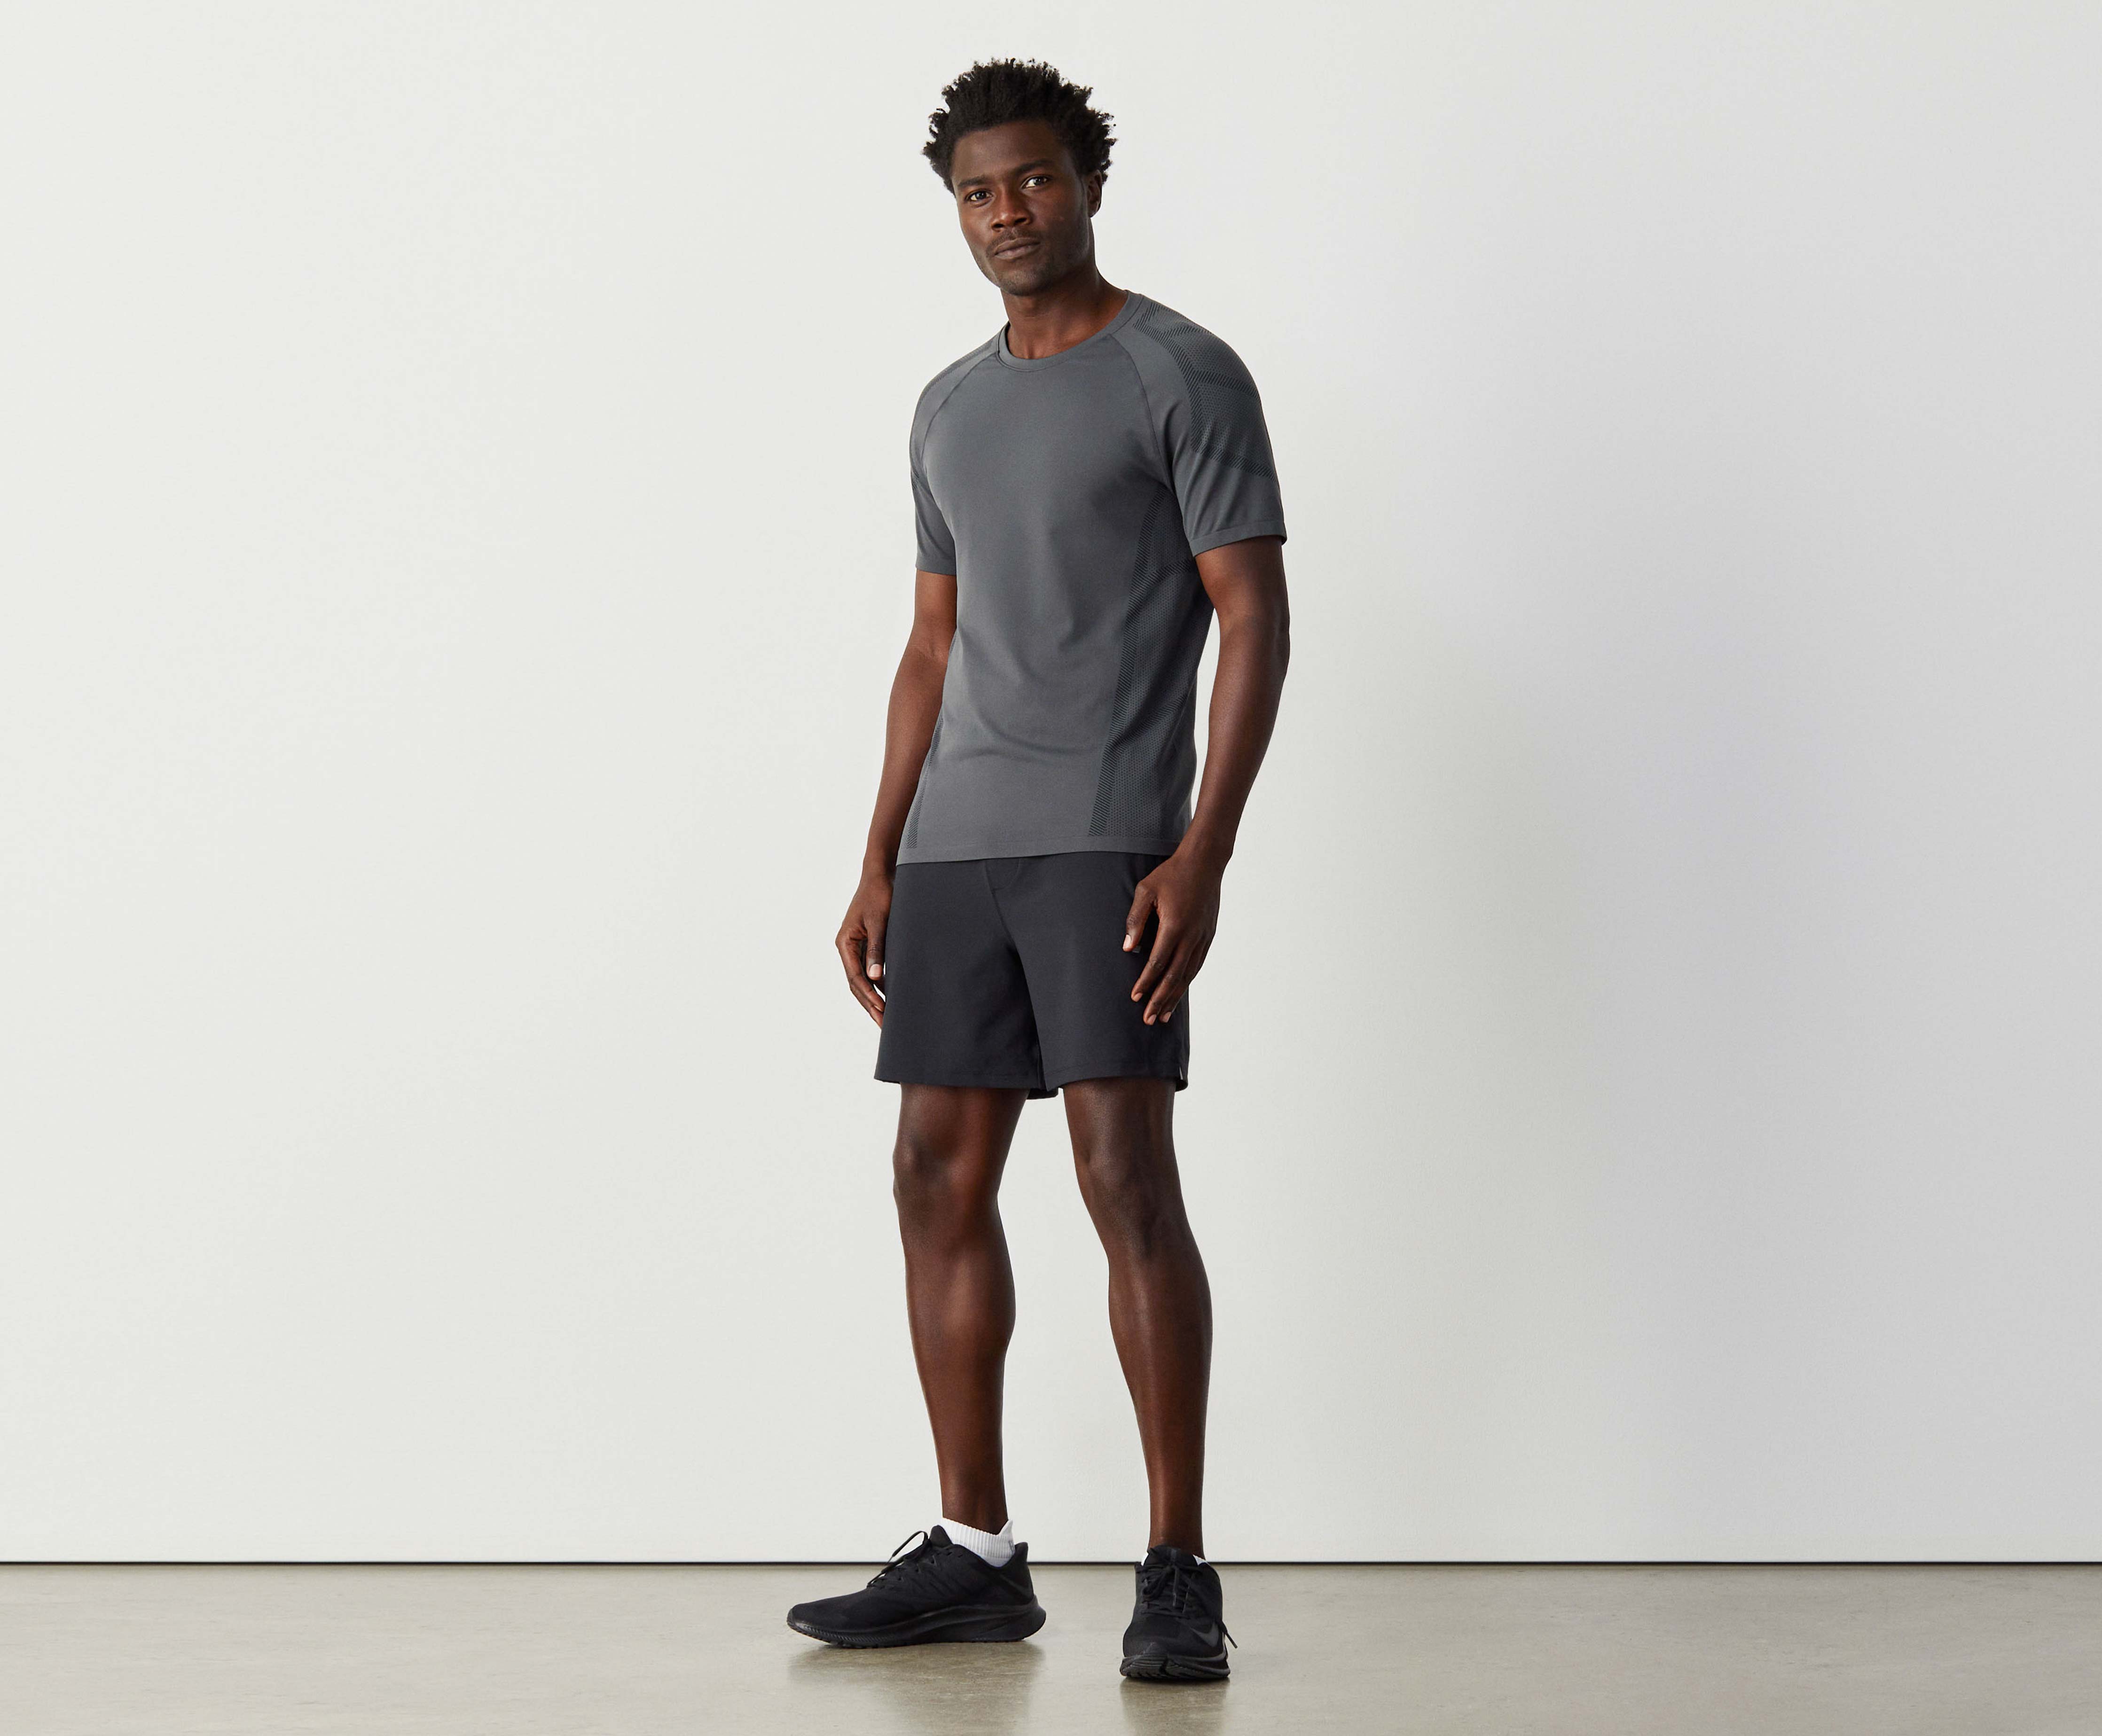 Short NBA Brand Drifit Jersey Shorts for Men Best Selling